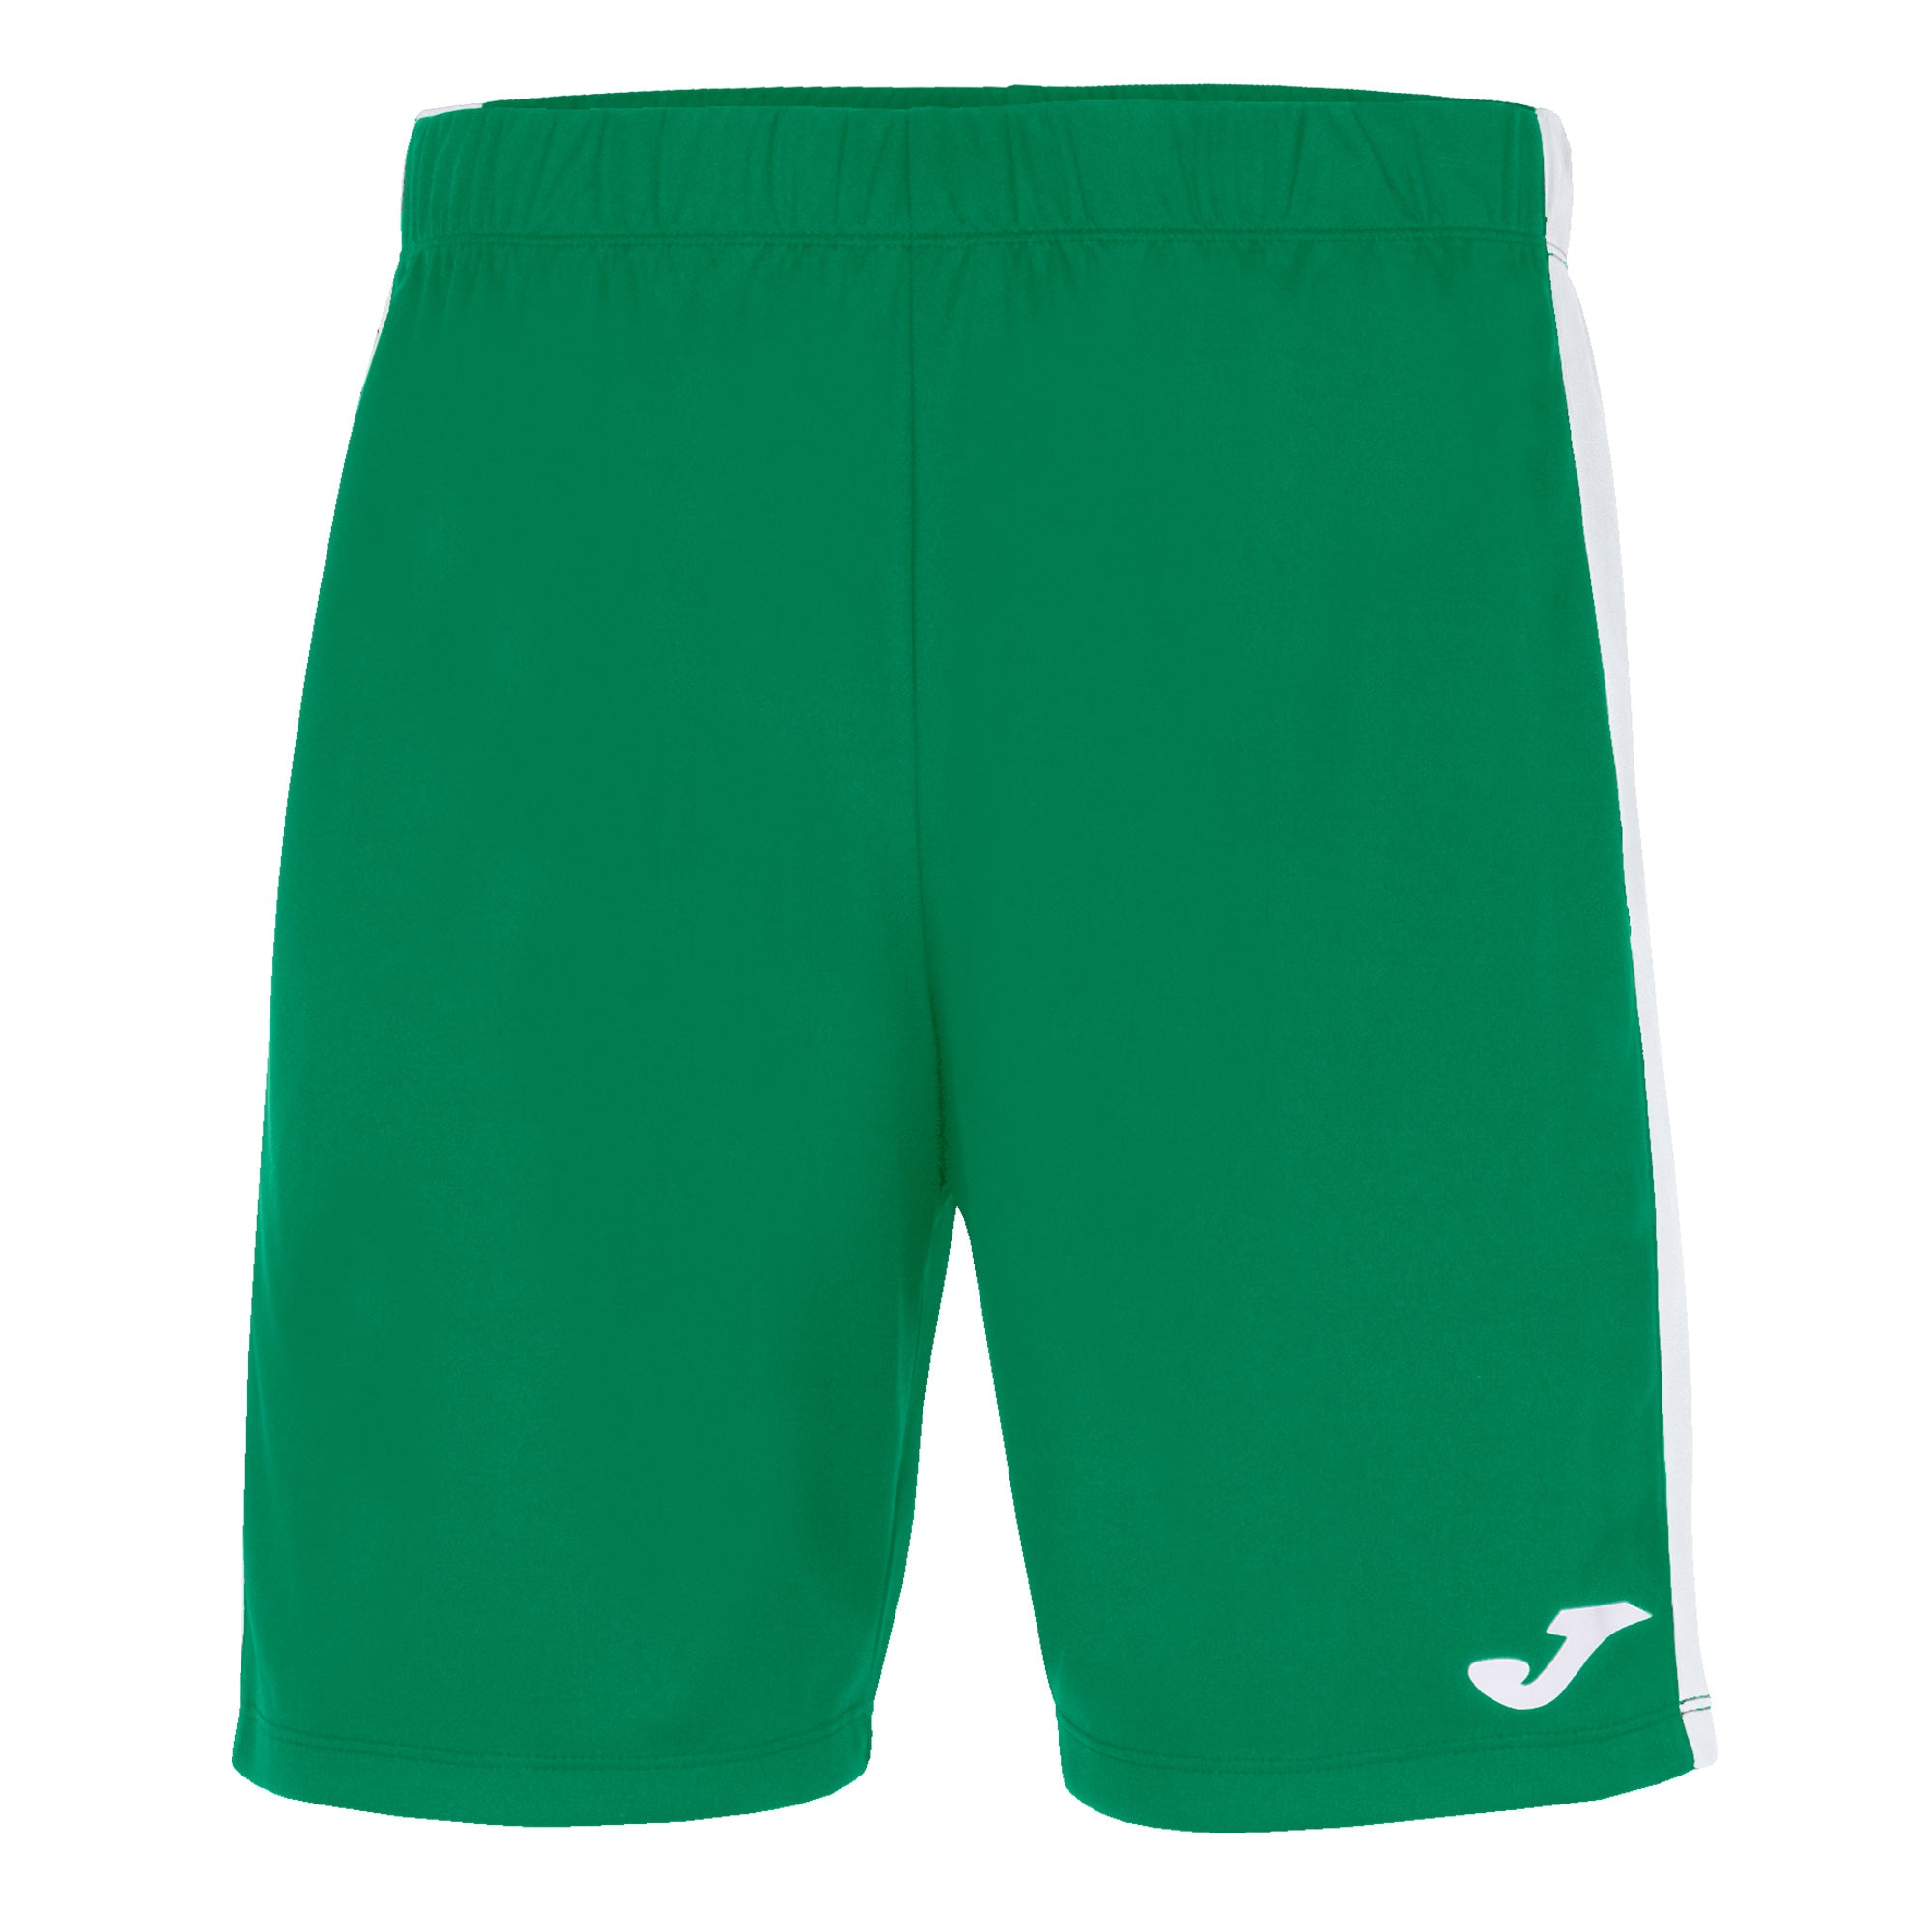 Joma Maxi Short - Green Medium/White